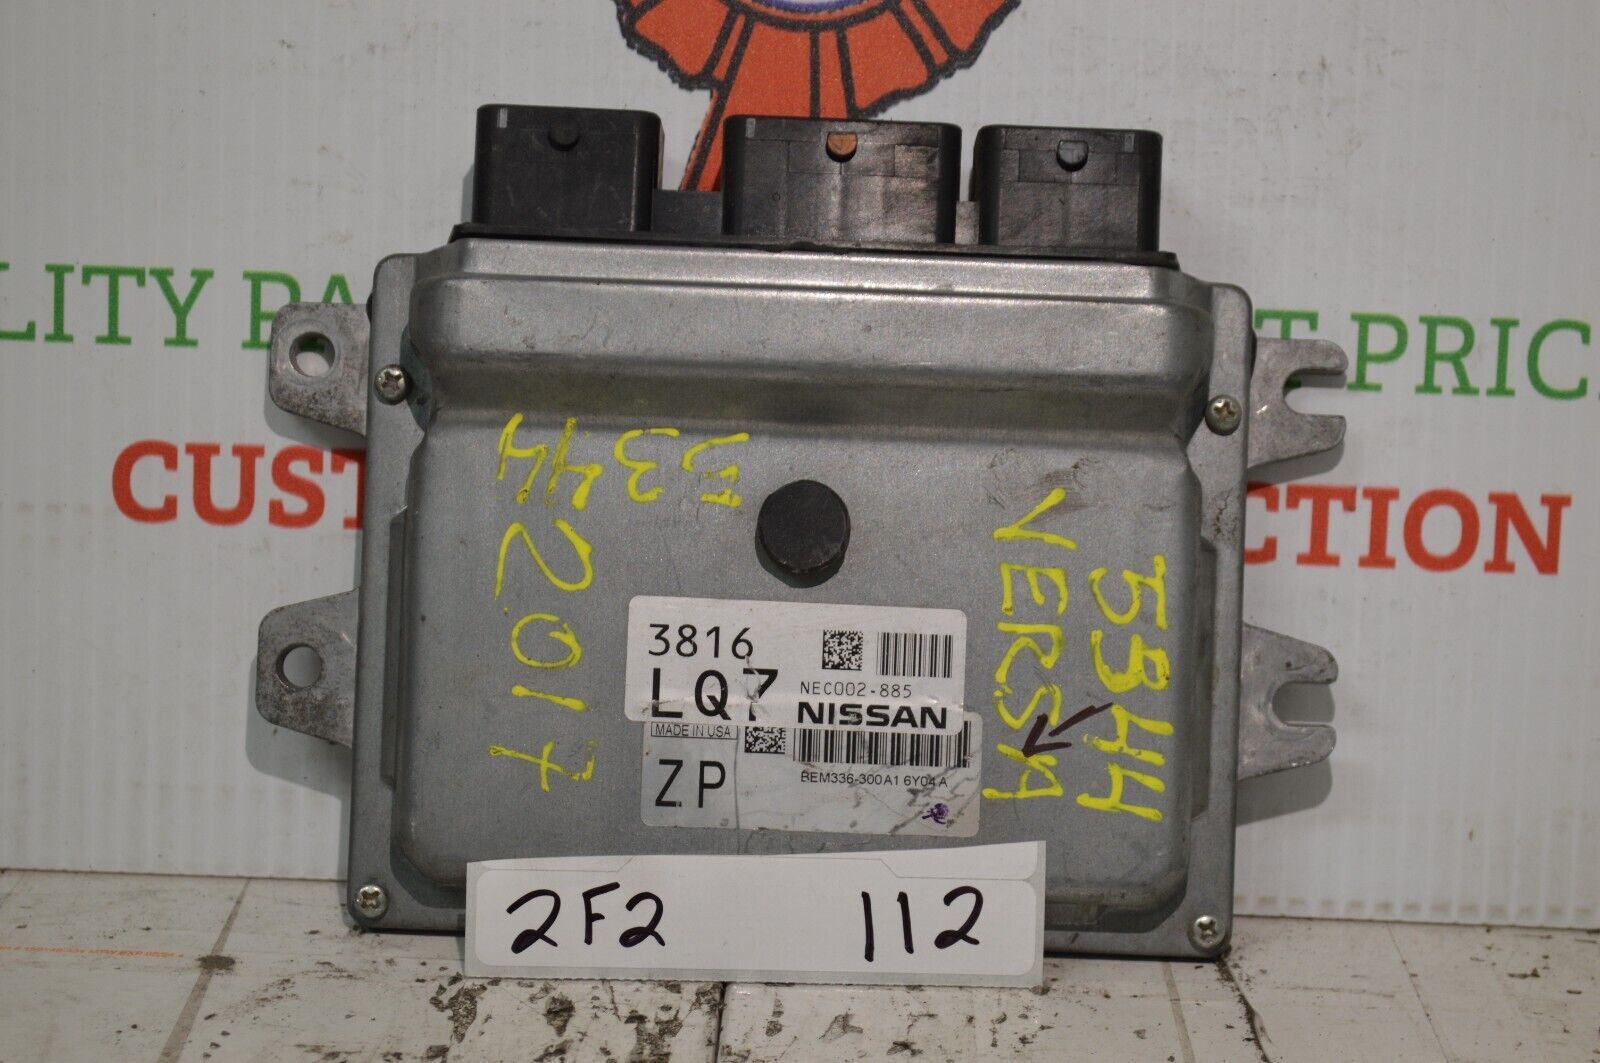 Primary image for 2014-2016 Nissan Versa Engine Control Unit ECU BEM336300A1 Module 112-2F2